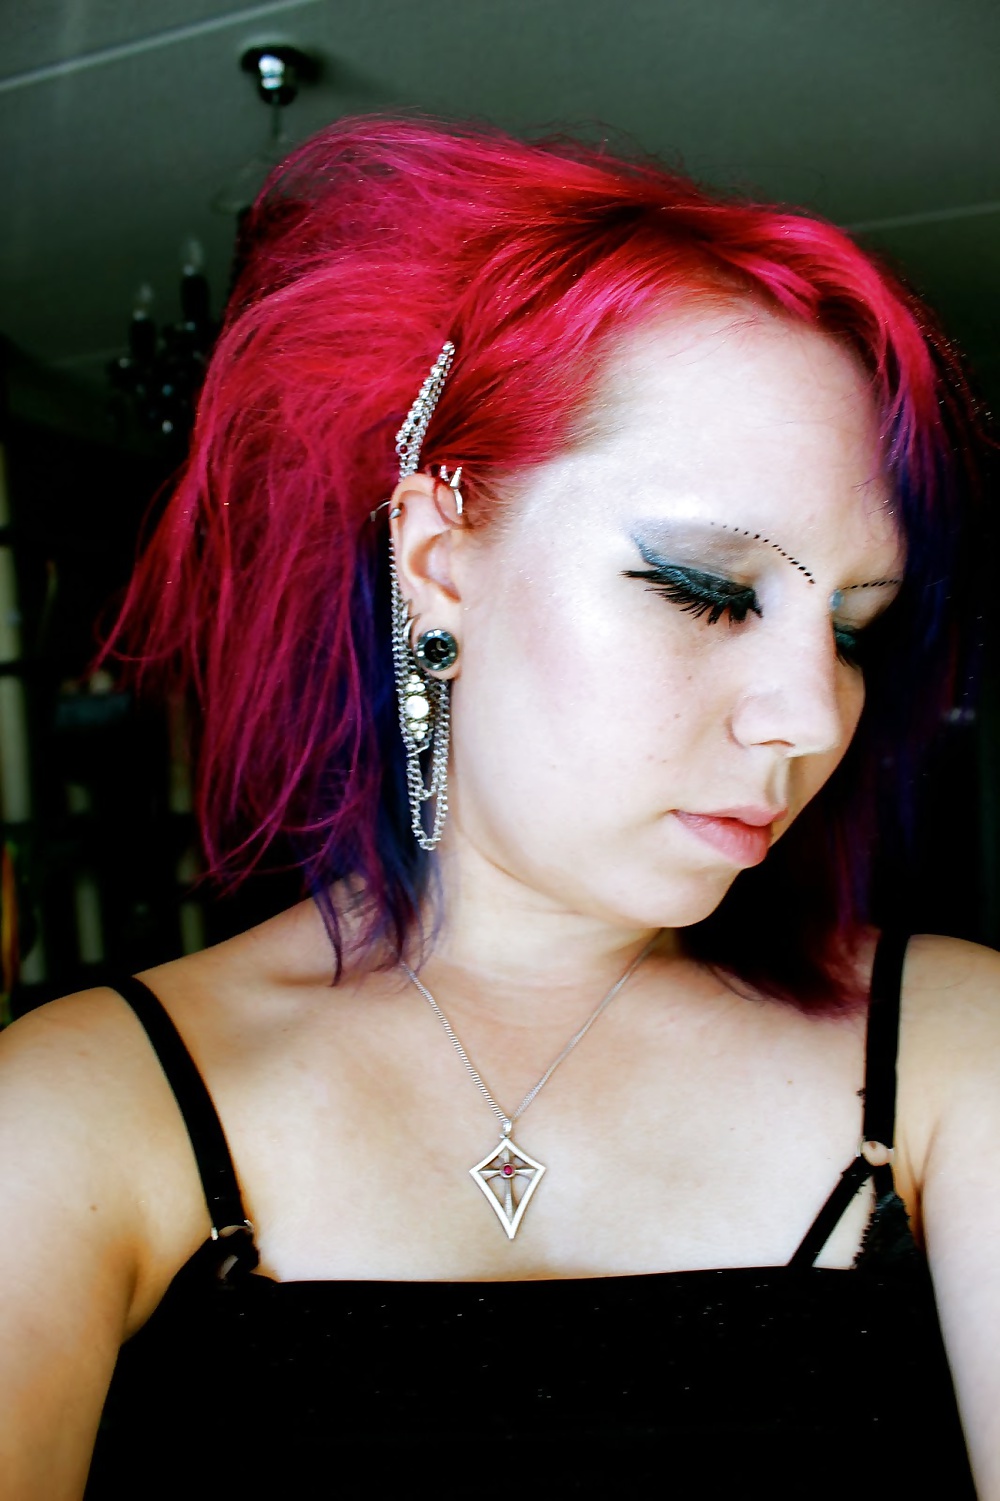 Gothic finnish blog girl #30152112